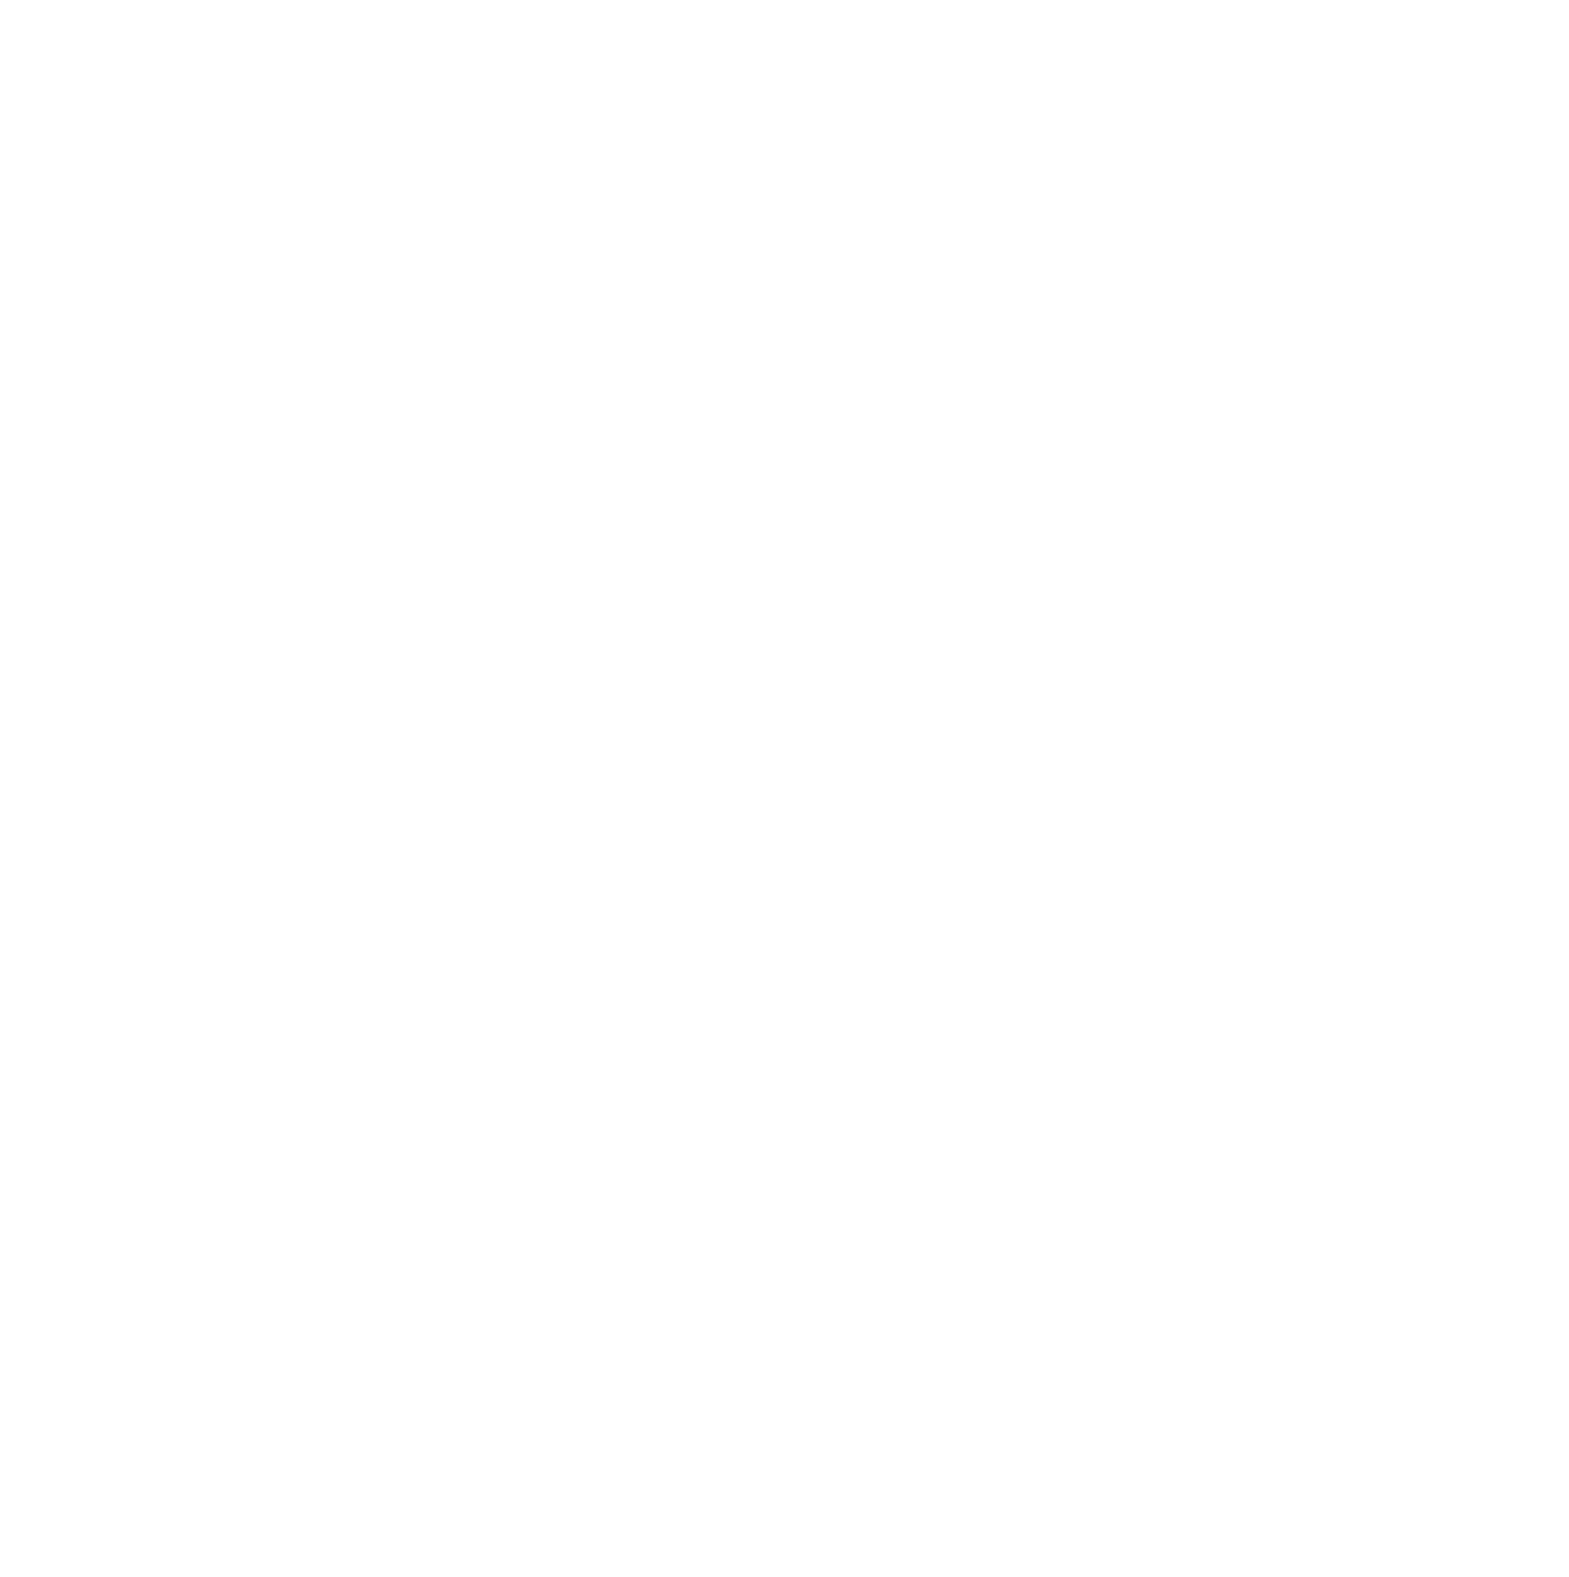 Just Eat Takeaway logo for dark backgrounds (transparent PNG)